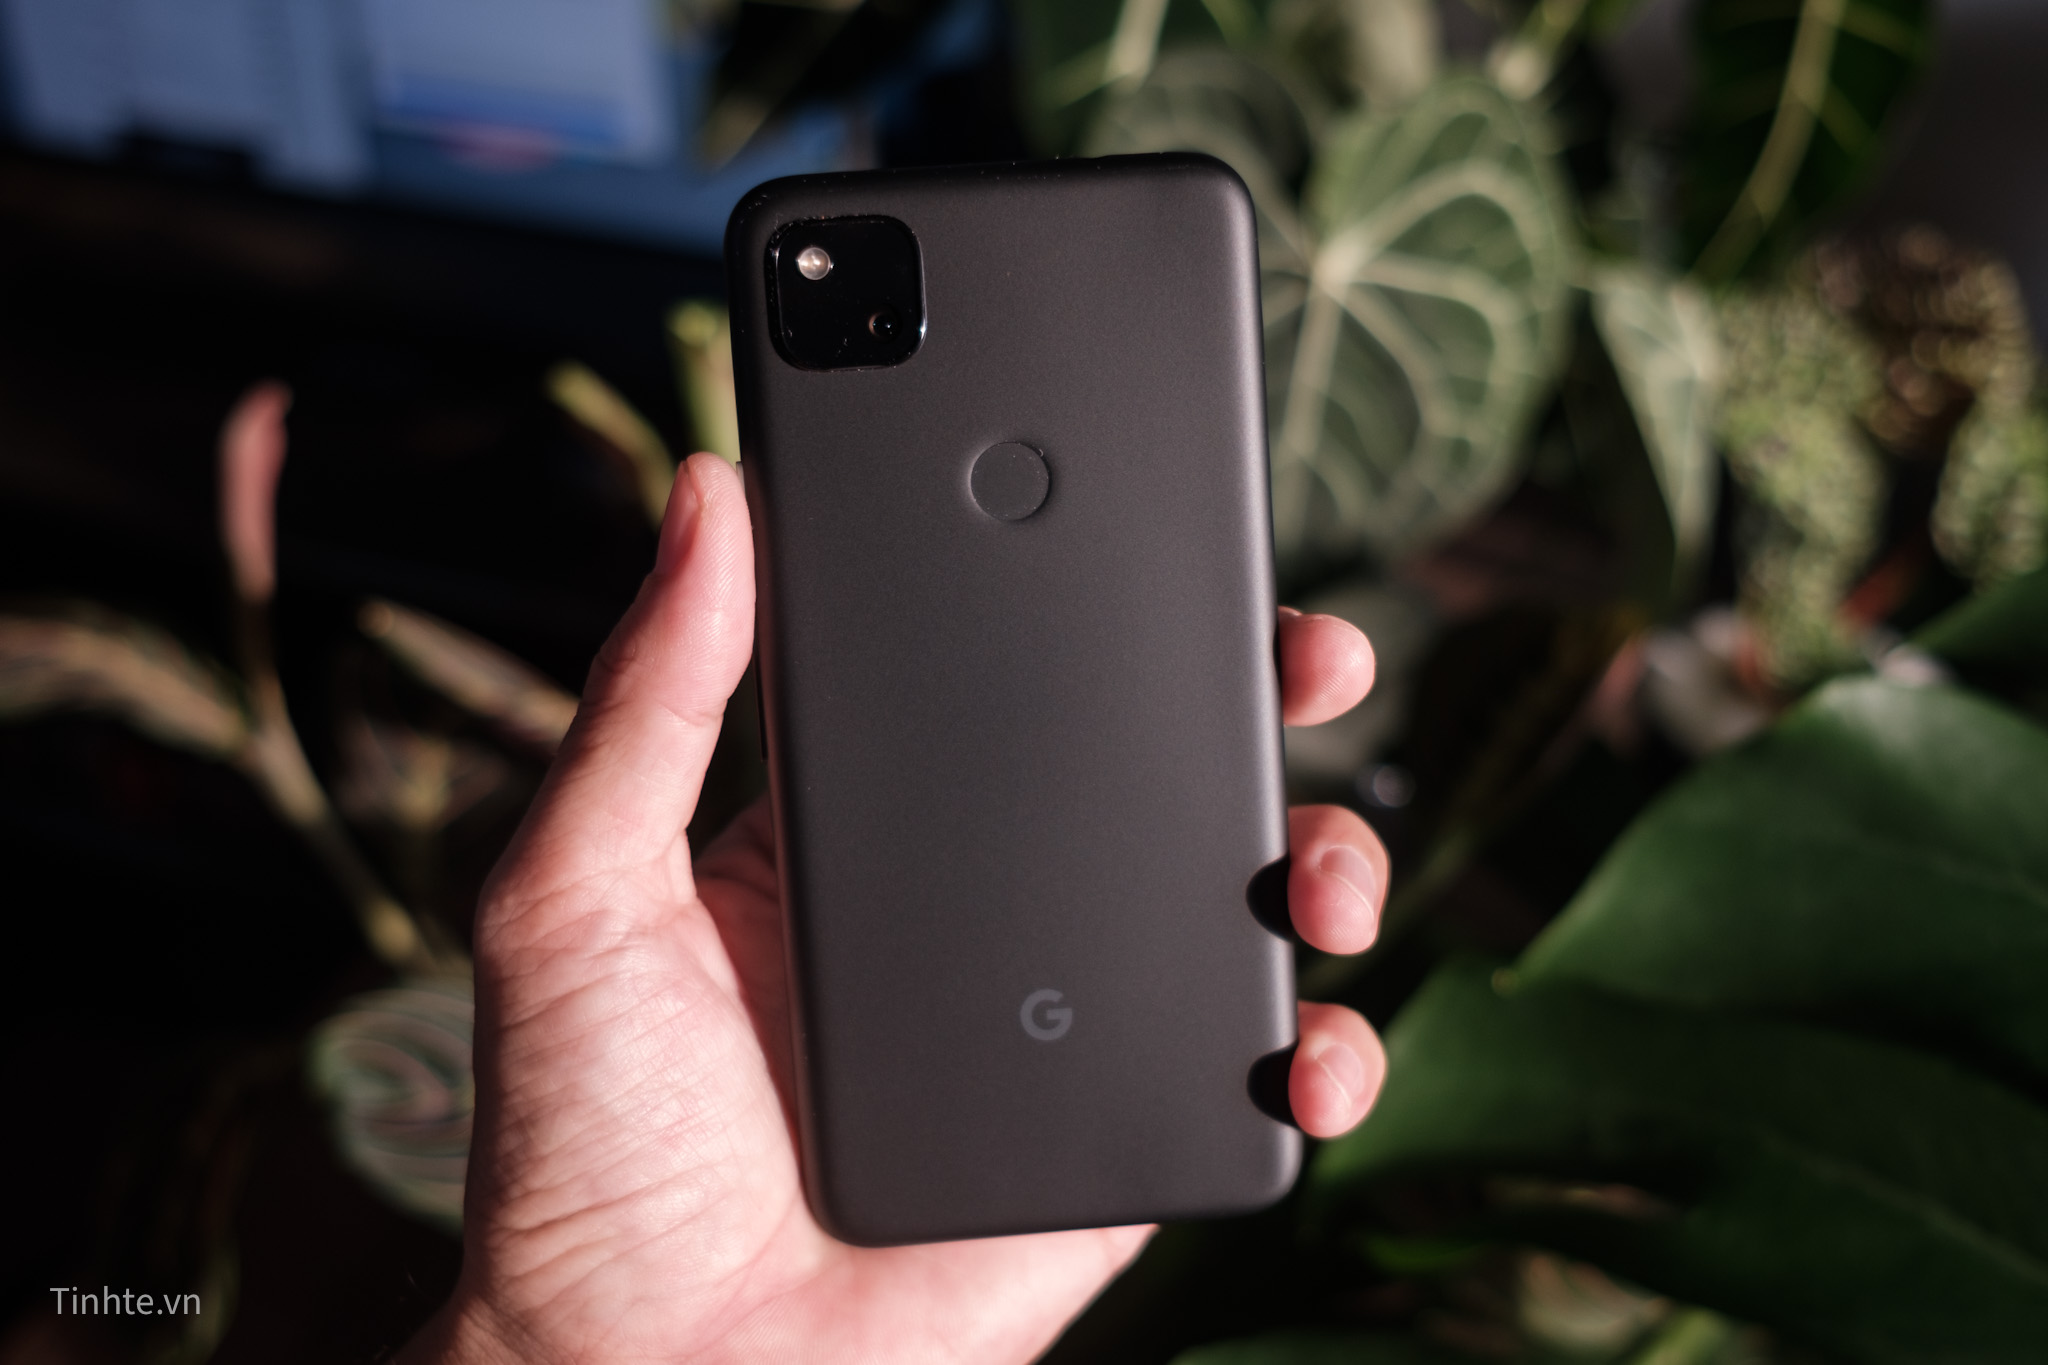 Trên tay Google Pixel 4A: Made in Vietnam